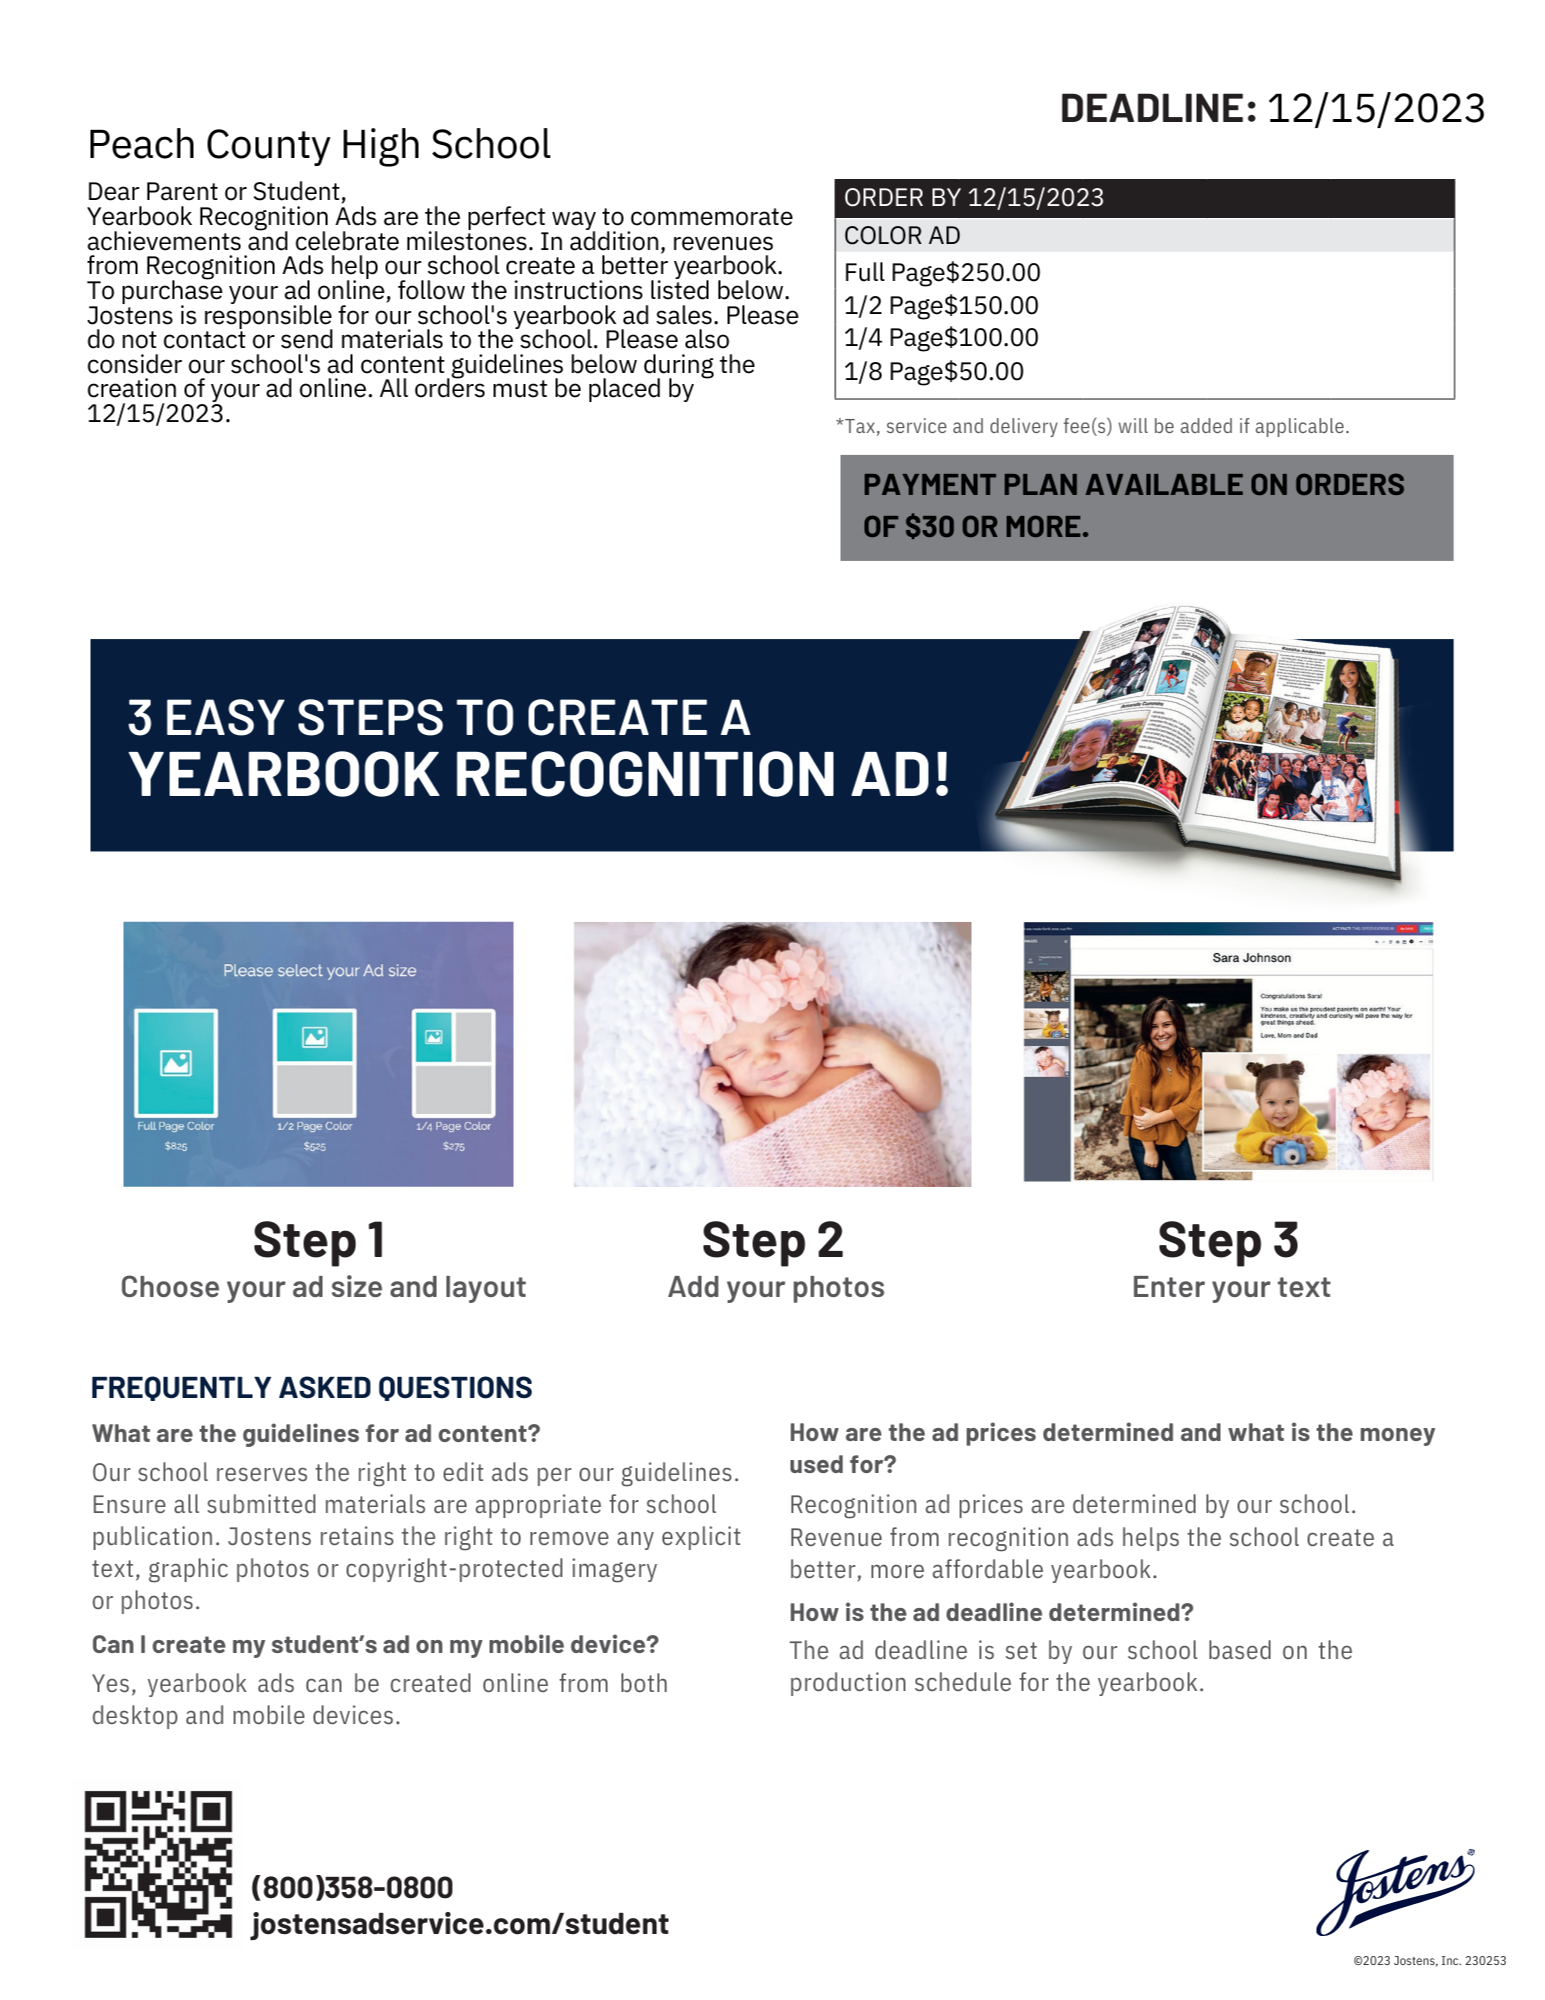 PCHS Senior Ad Information